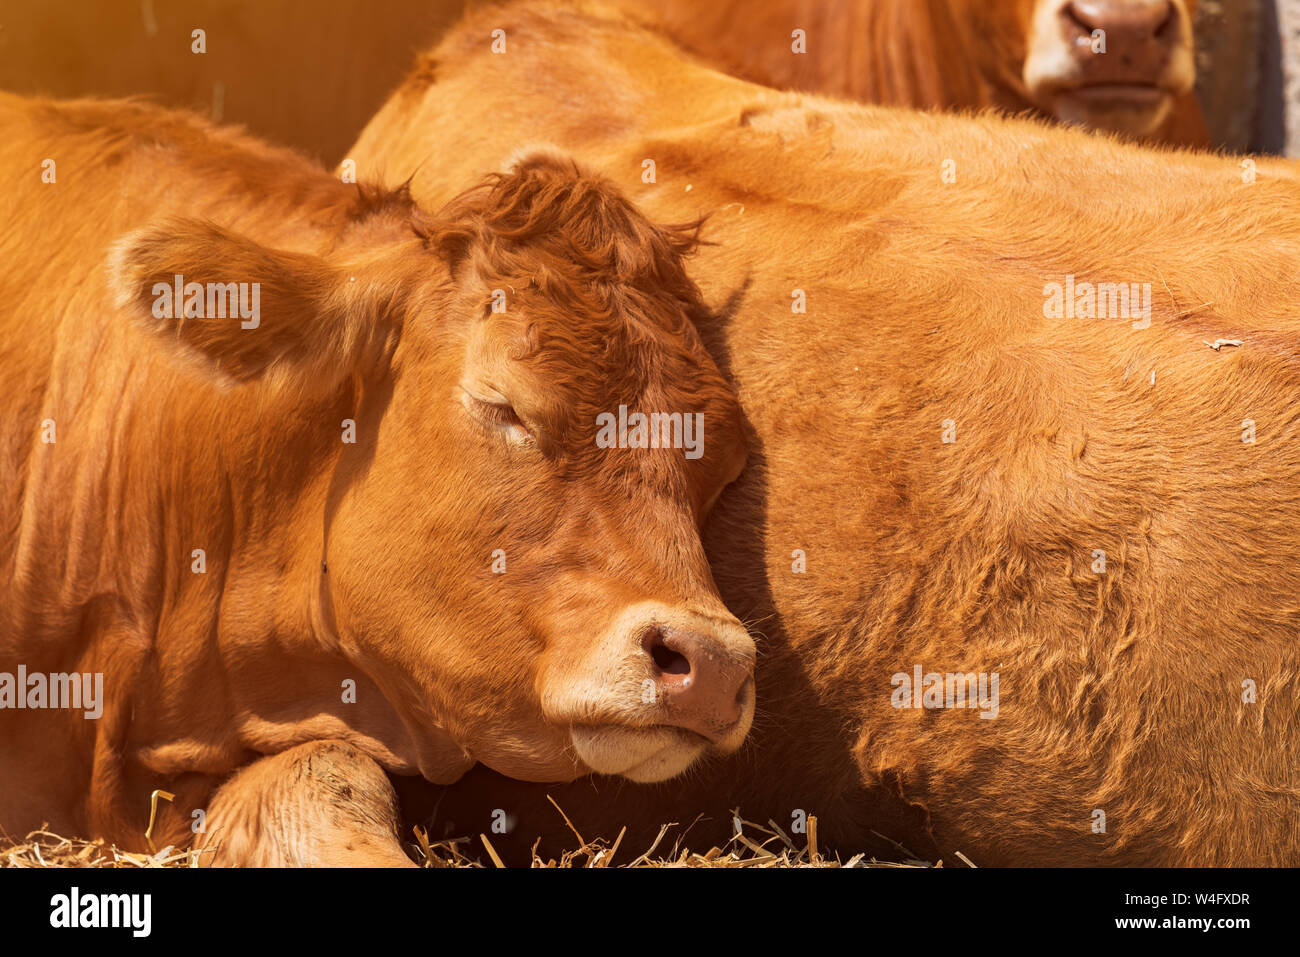 Red holstein friesian cow on livestock dairy farm, domestic animals husbandry Stock Photo